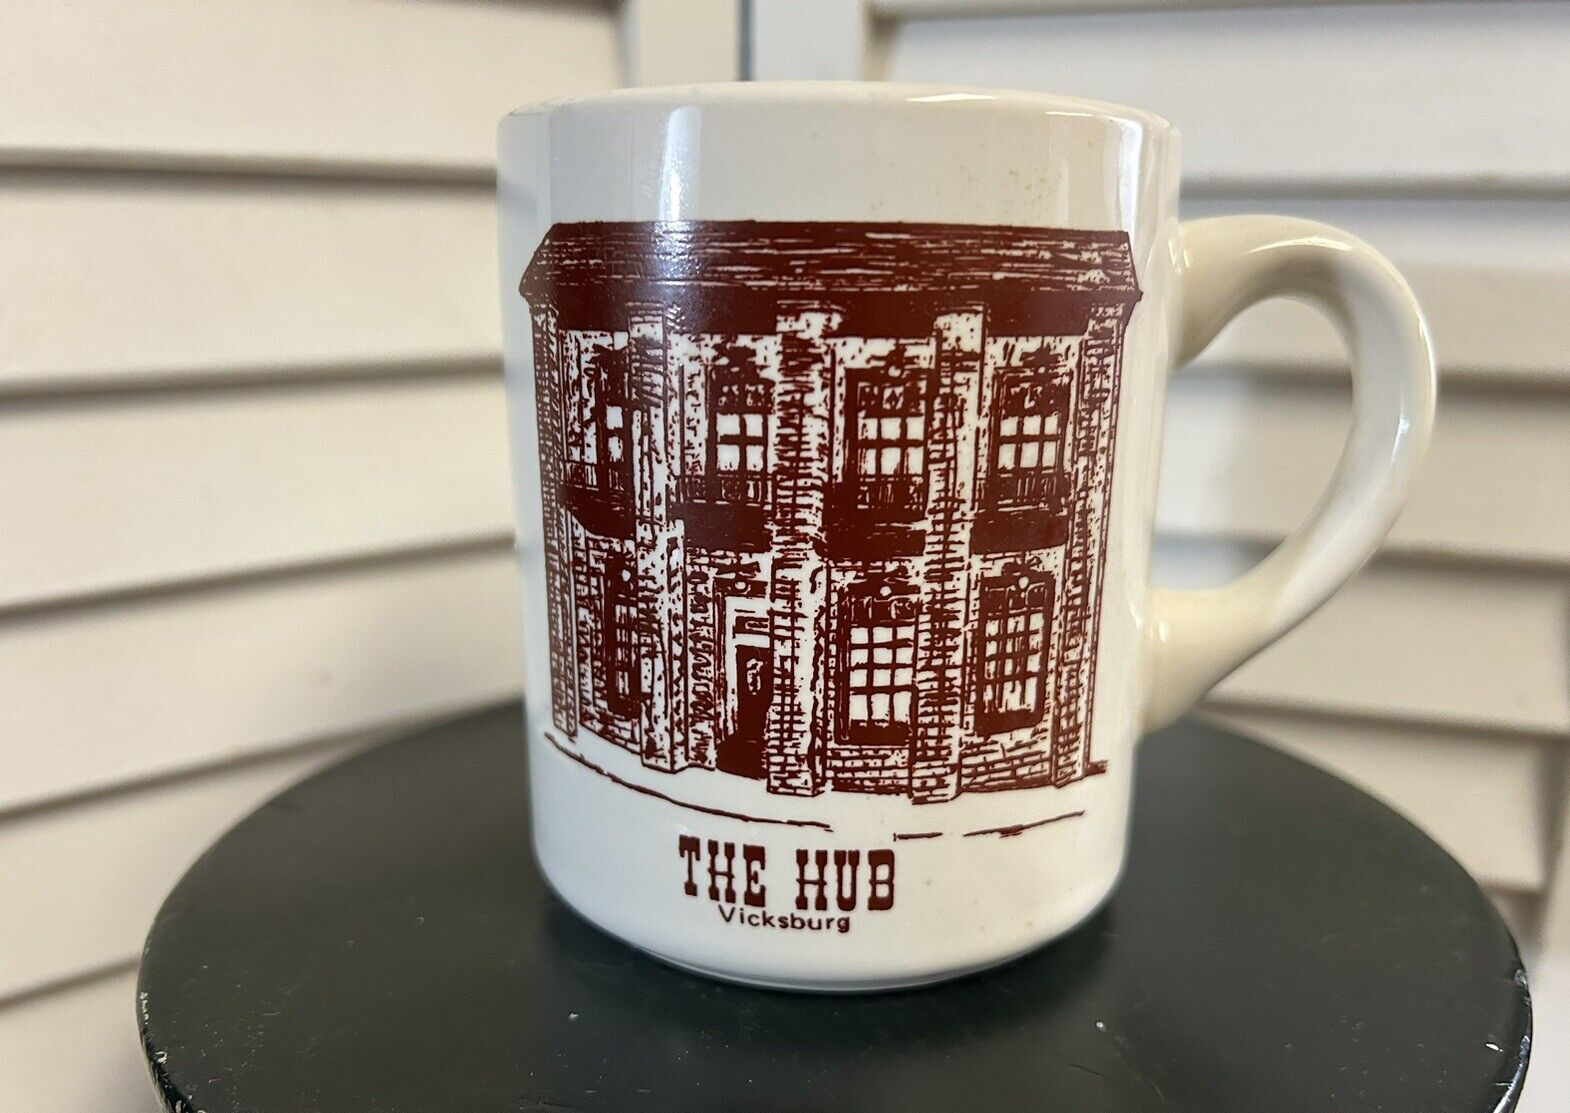 Vintage coffee mug cup THE HUB clothing store Vicksburg Mississippi department